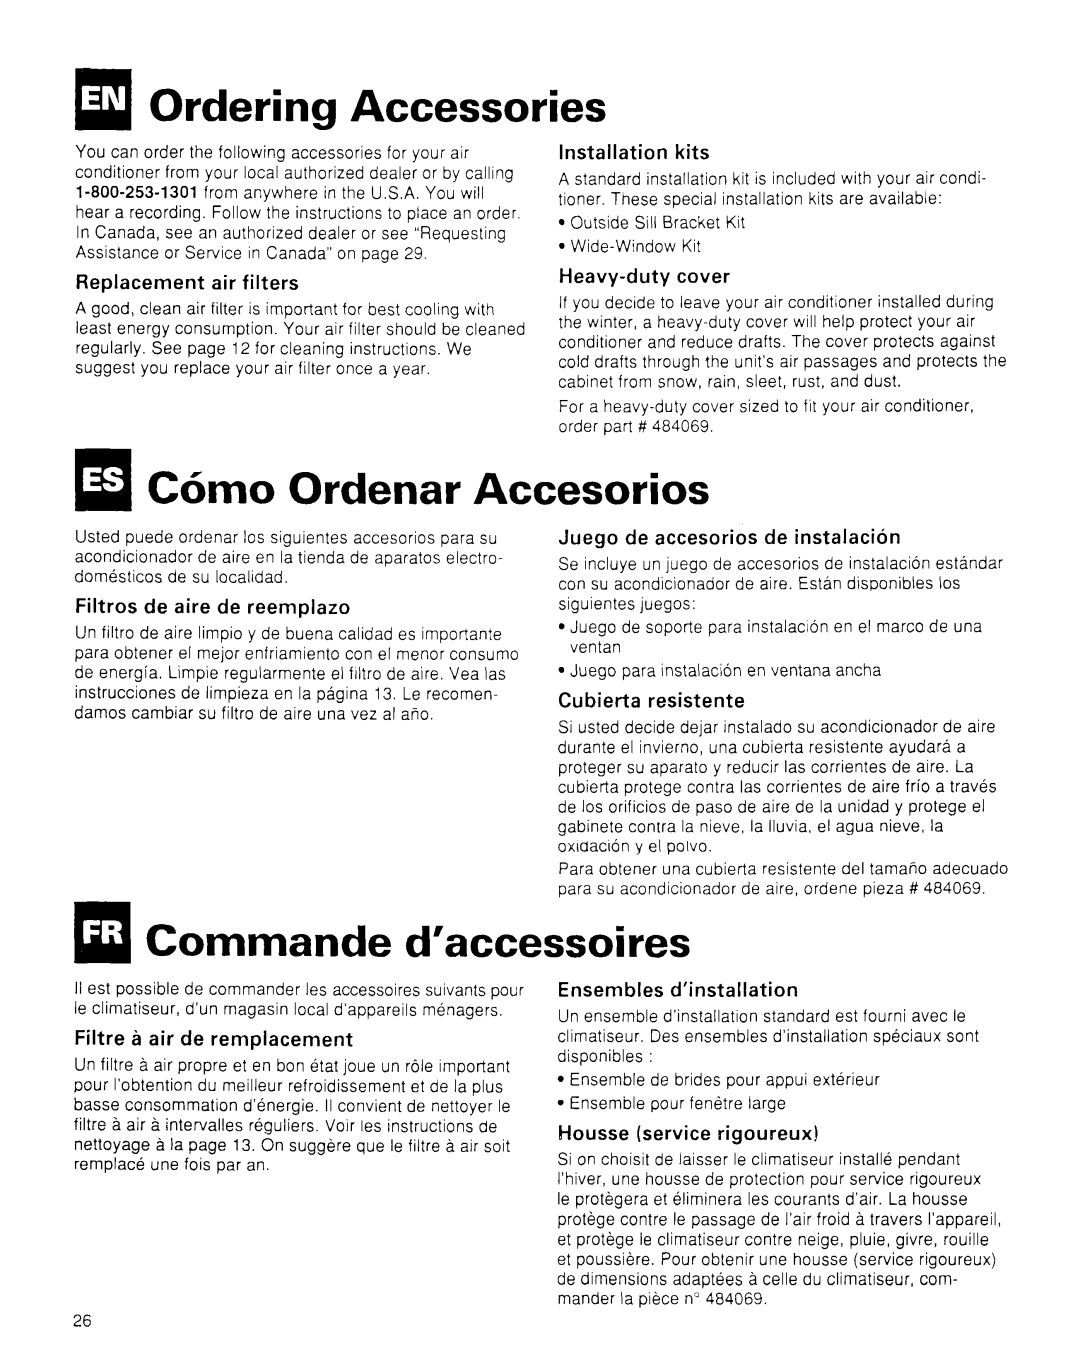 Whirlpool CA8WR42 manual Ordering Accessories, C6mo Ordenar Accesorios, QD Commande d’accessoires 